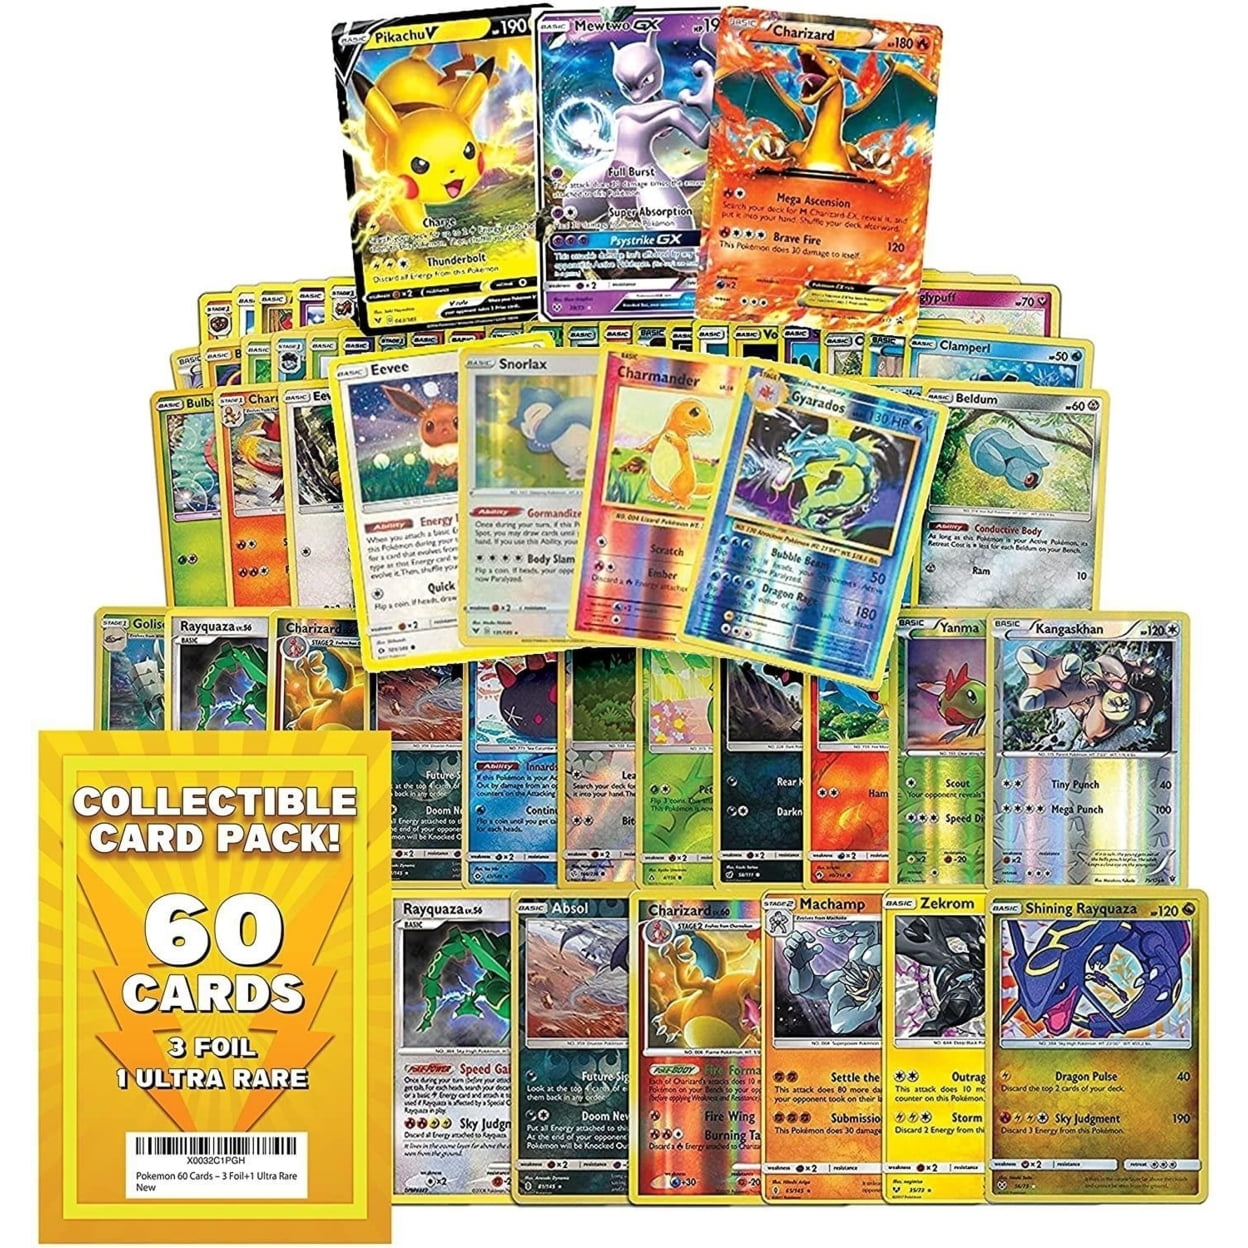 Pokémon Card Collection with 100 Unique Vmax Cards – No Duplicates